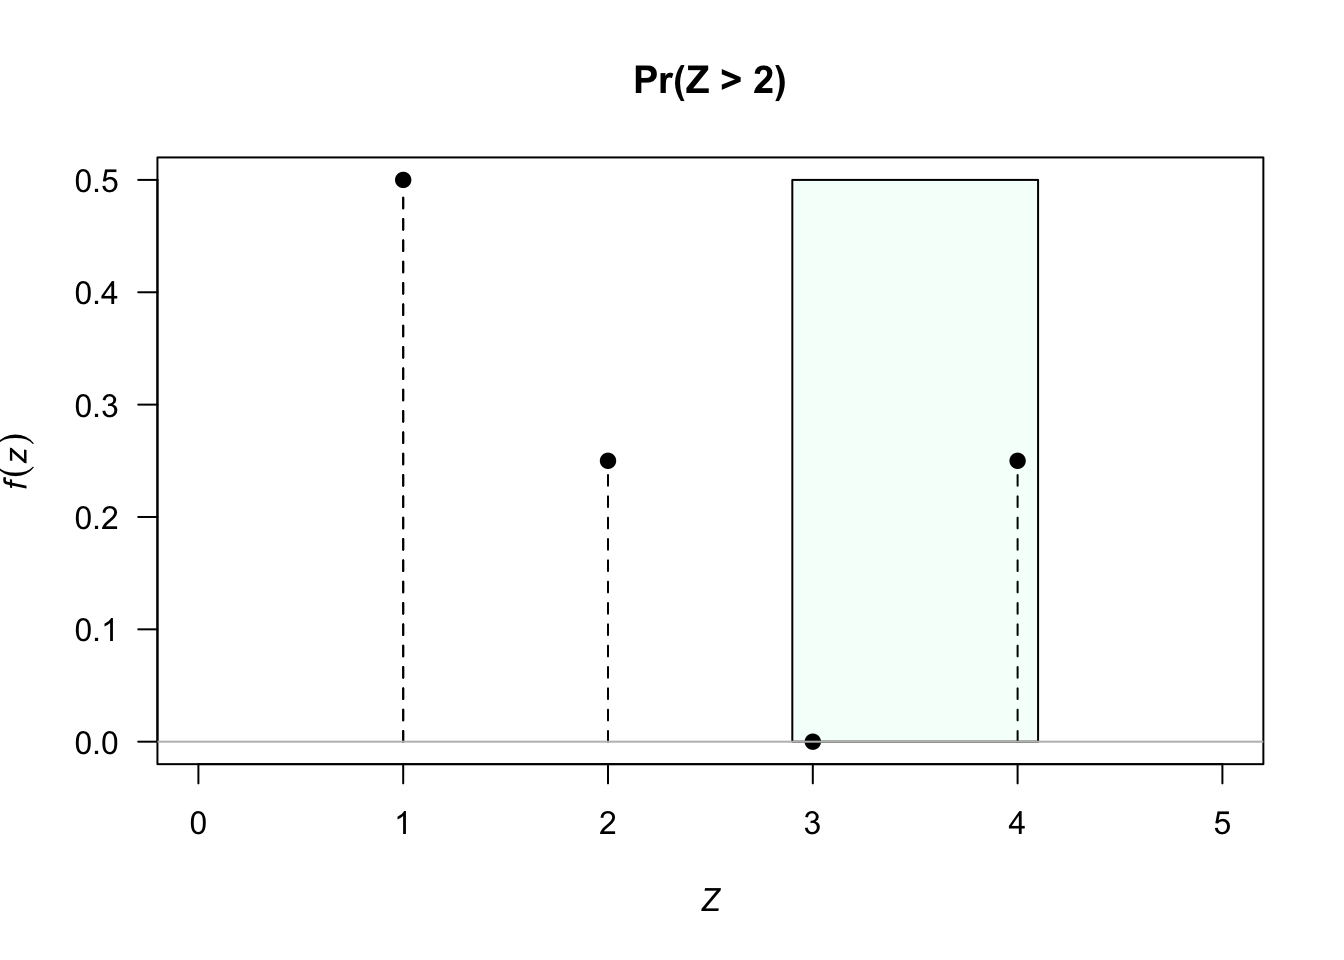 The discrete distribution for $Z$